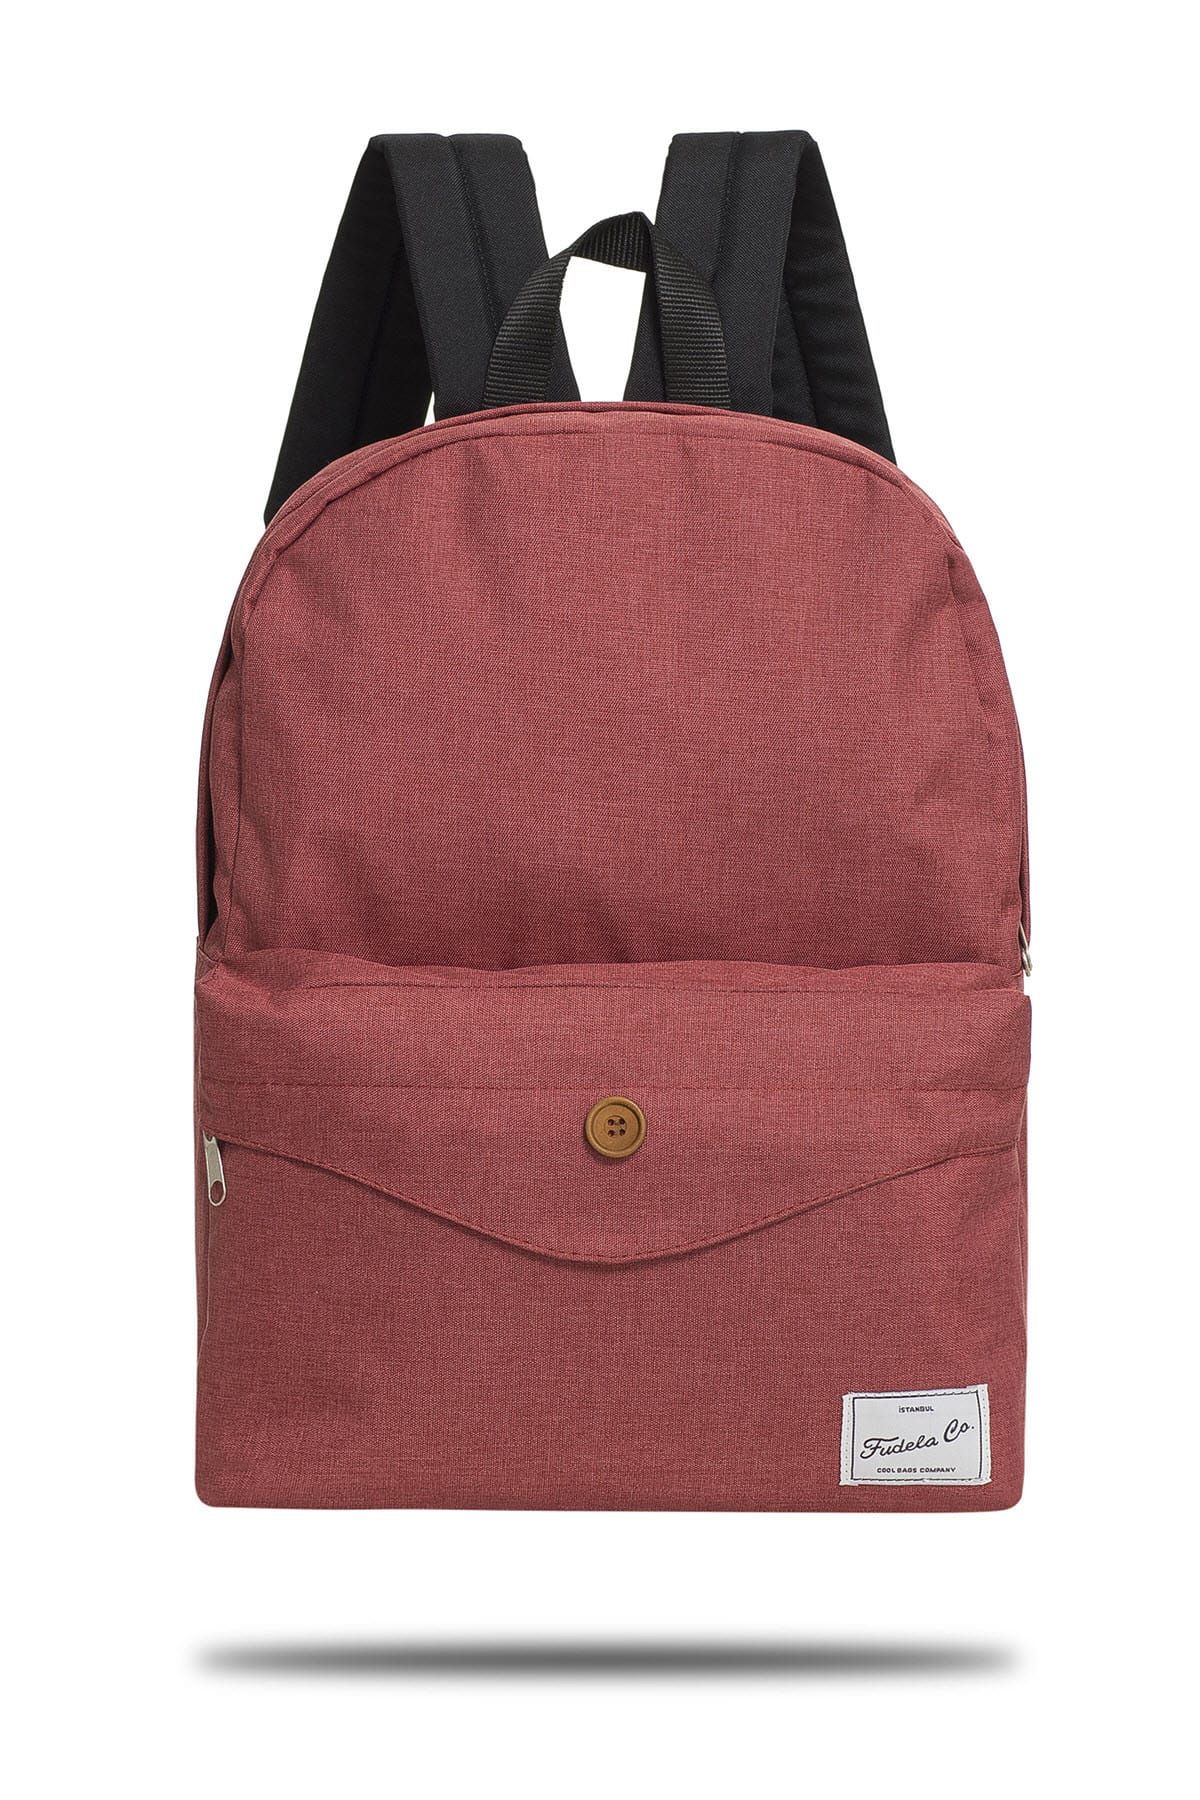 Fudela Unisex TNJ  Red Backpack Sırt Çantası  FD09